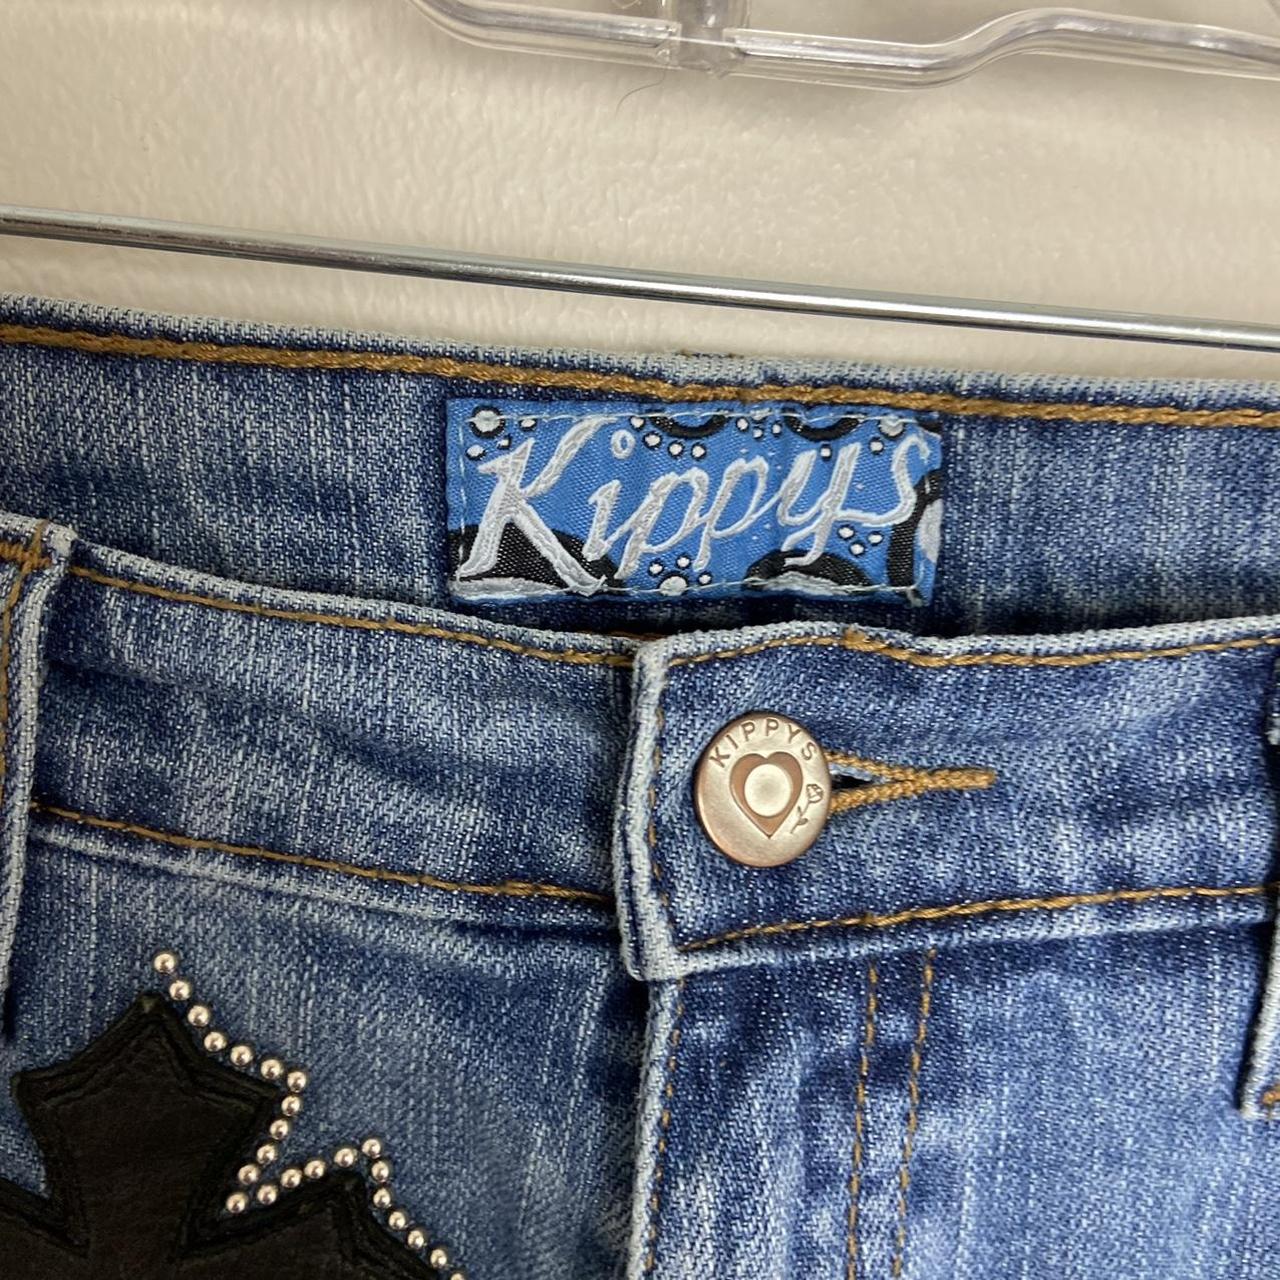 Vintage Kippys Cross Jeans USA made. Nice Swarovski... - Depop